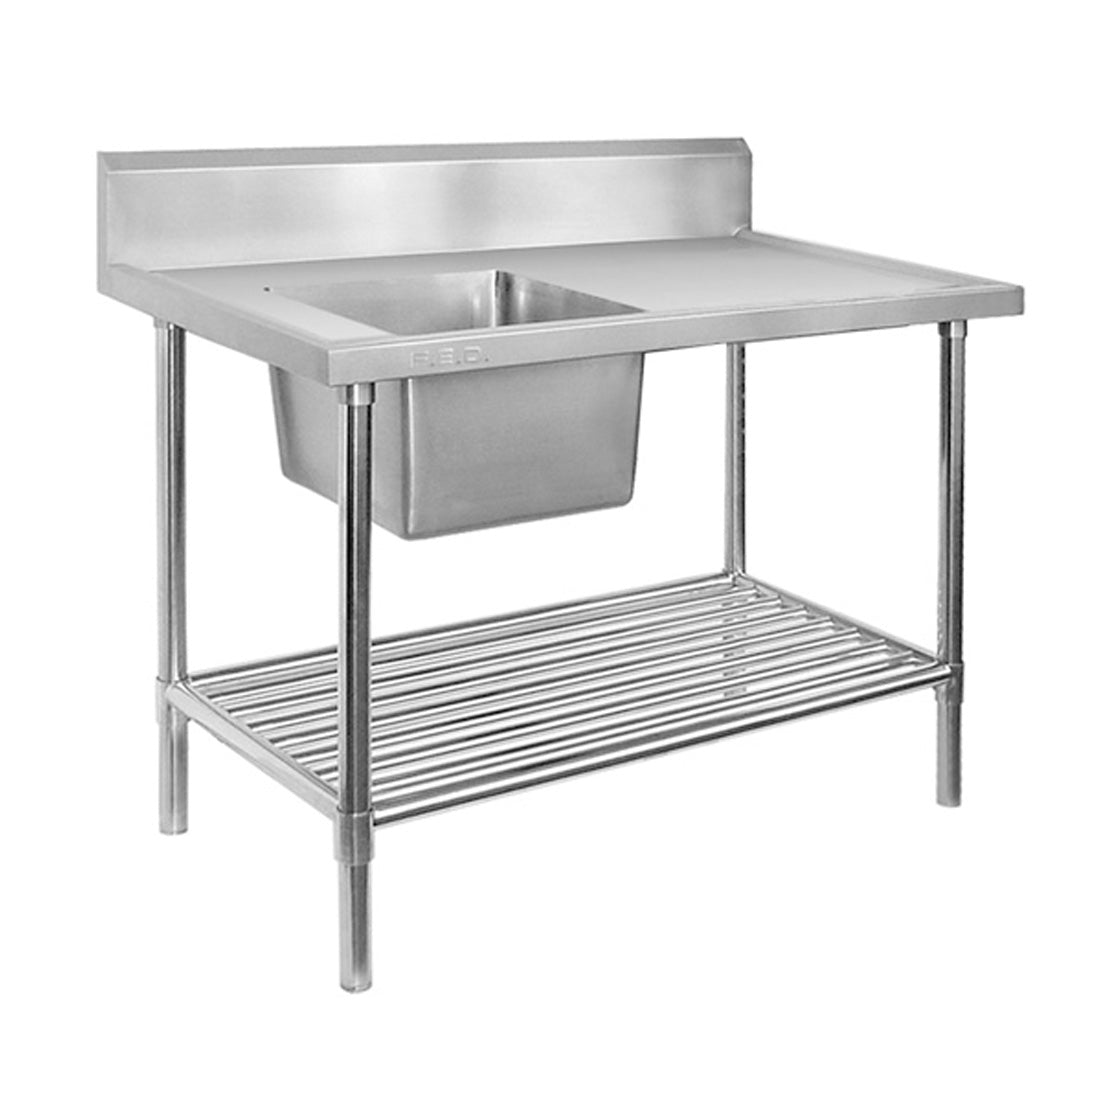 Single Left Sink Bench with Pot Undershelf SSB7-1800L/A